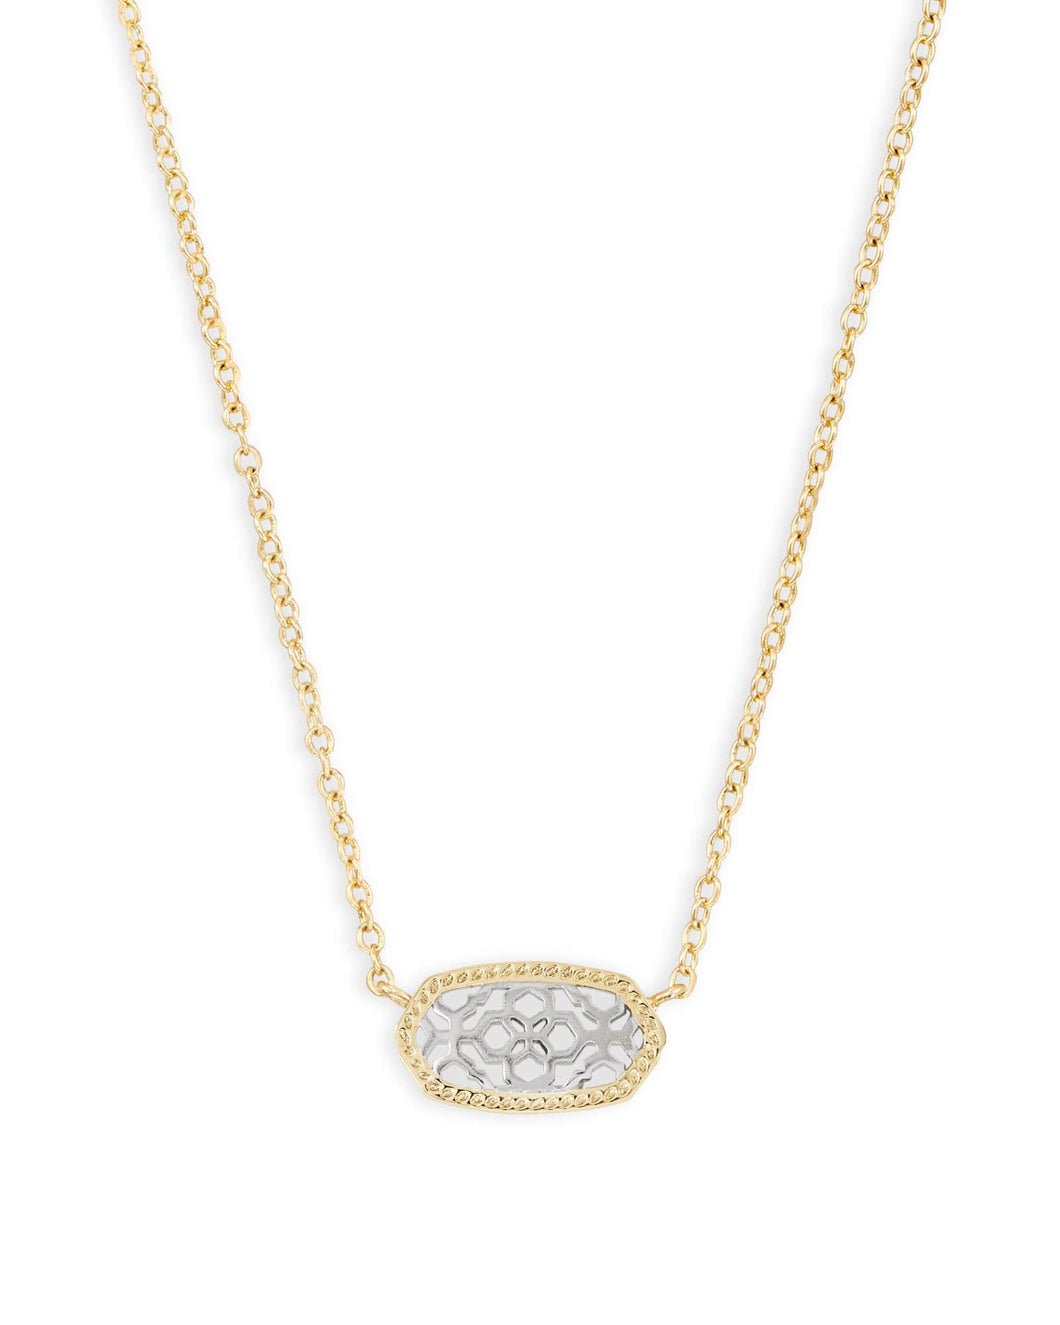 Kendra Scott Elisa Gold Pendant Necklace in Filigree Mix Gold/Silver